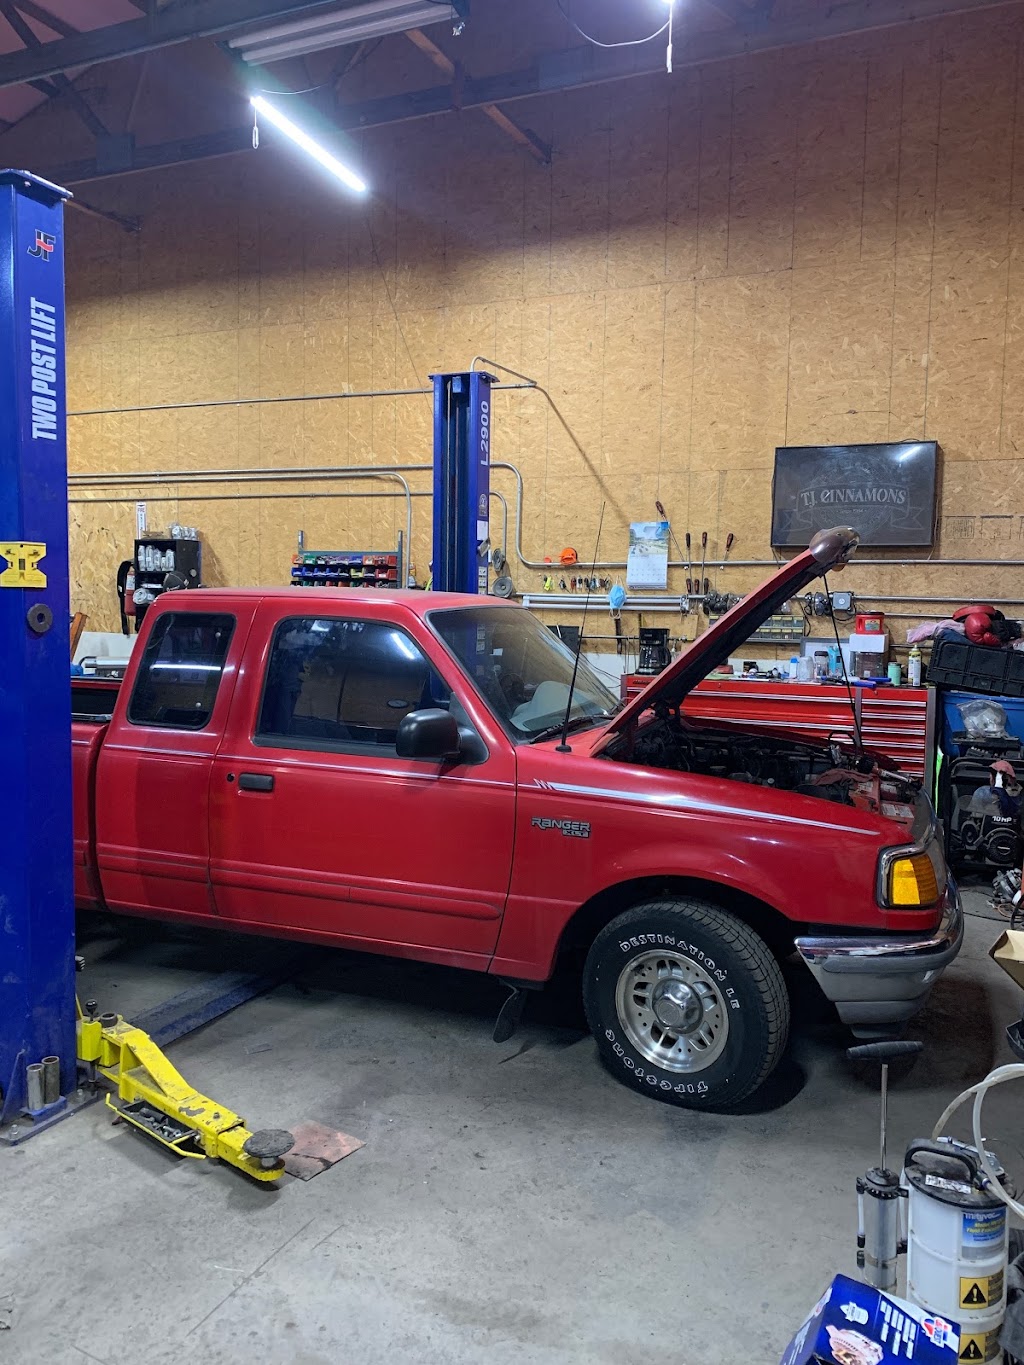 Francos Auto Repair | 2493 Ripley St, Lake Station, IN 46405, USA | Phone: (219) 629-6135